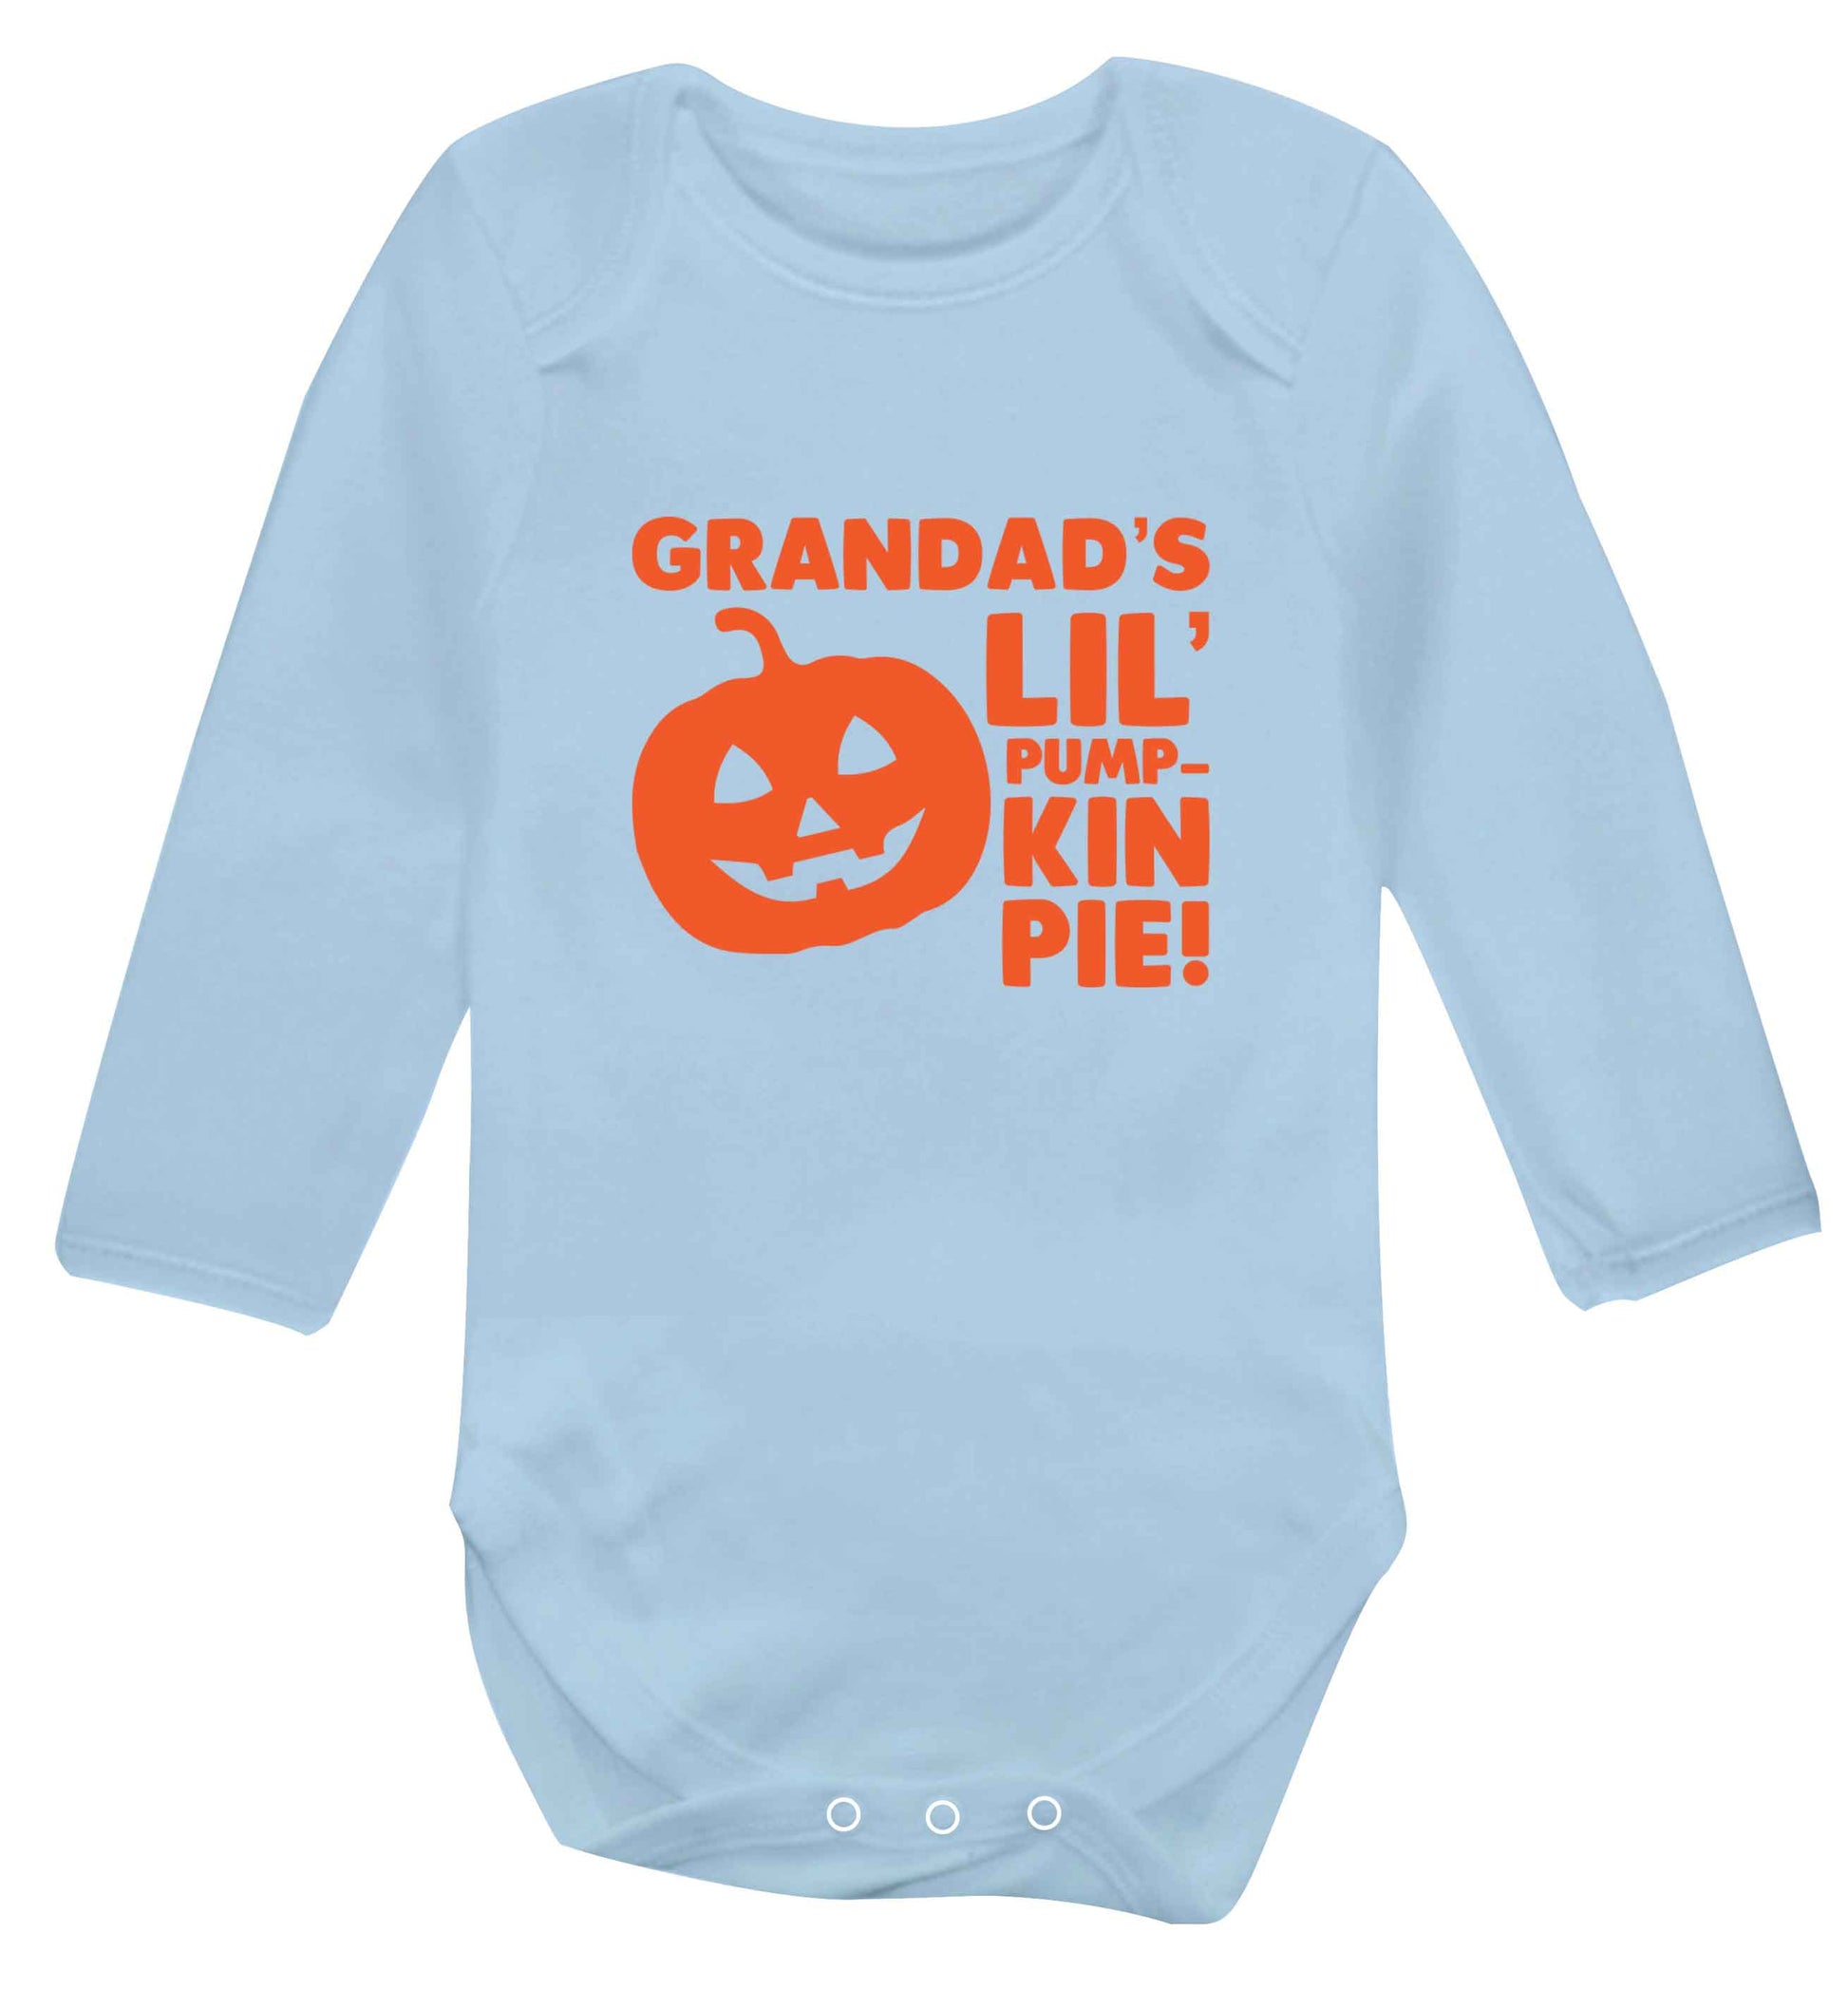 Grandad's lil' pumpkin pie baby vest long sleeved pale blue 6-12 months